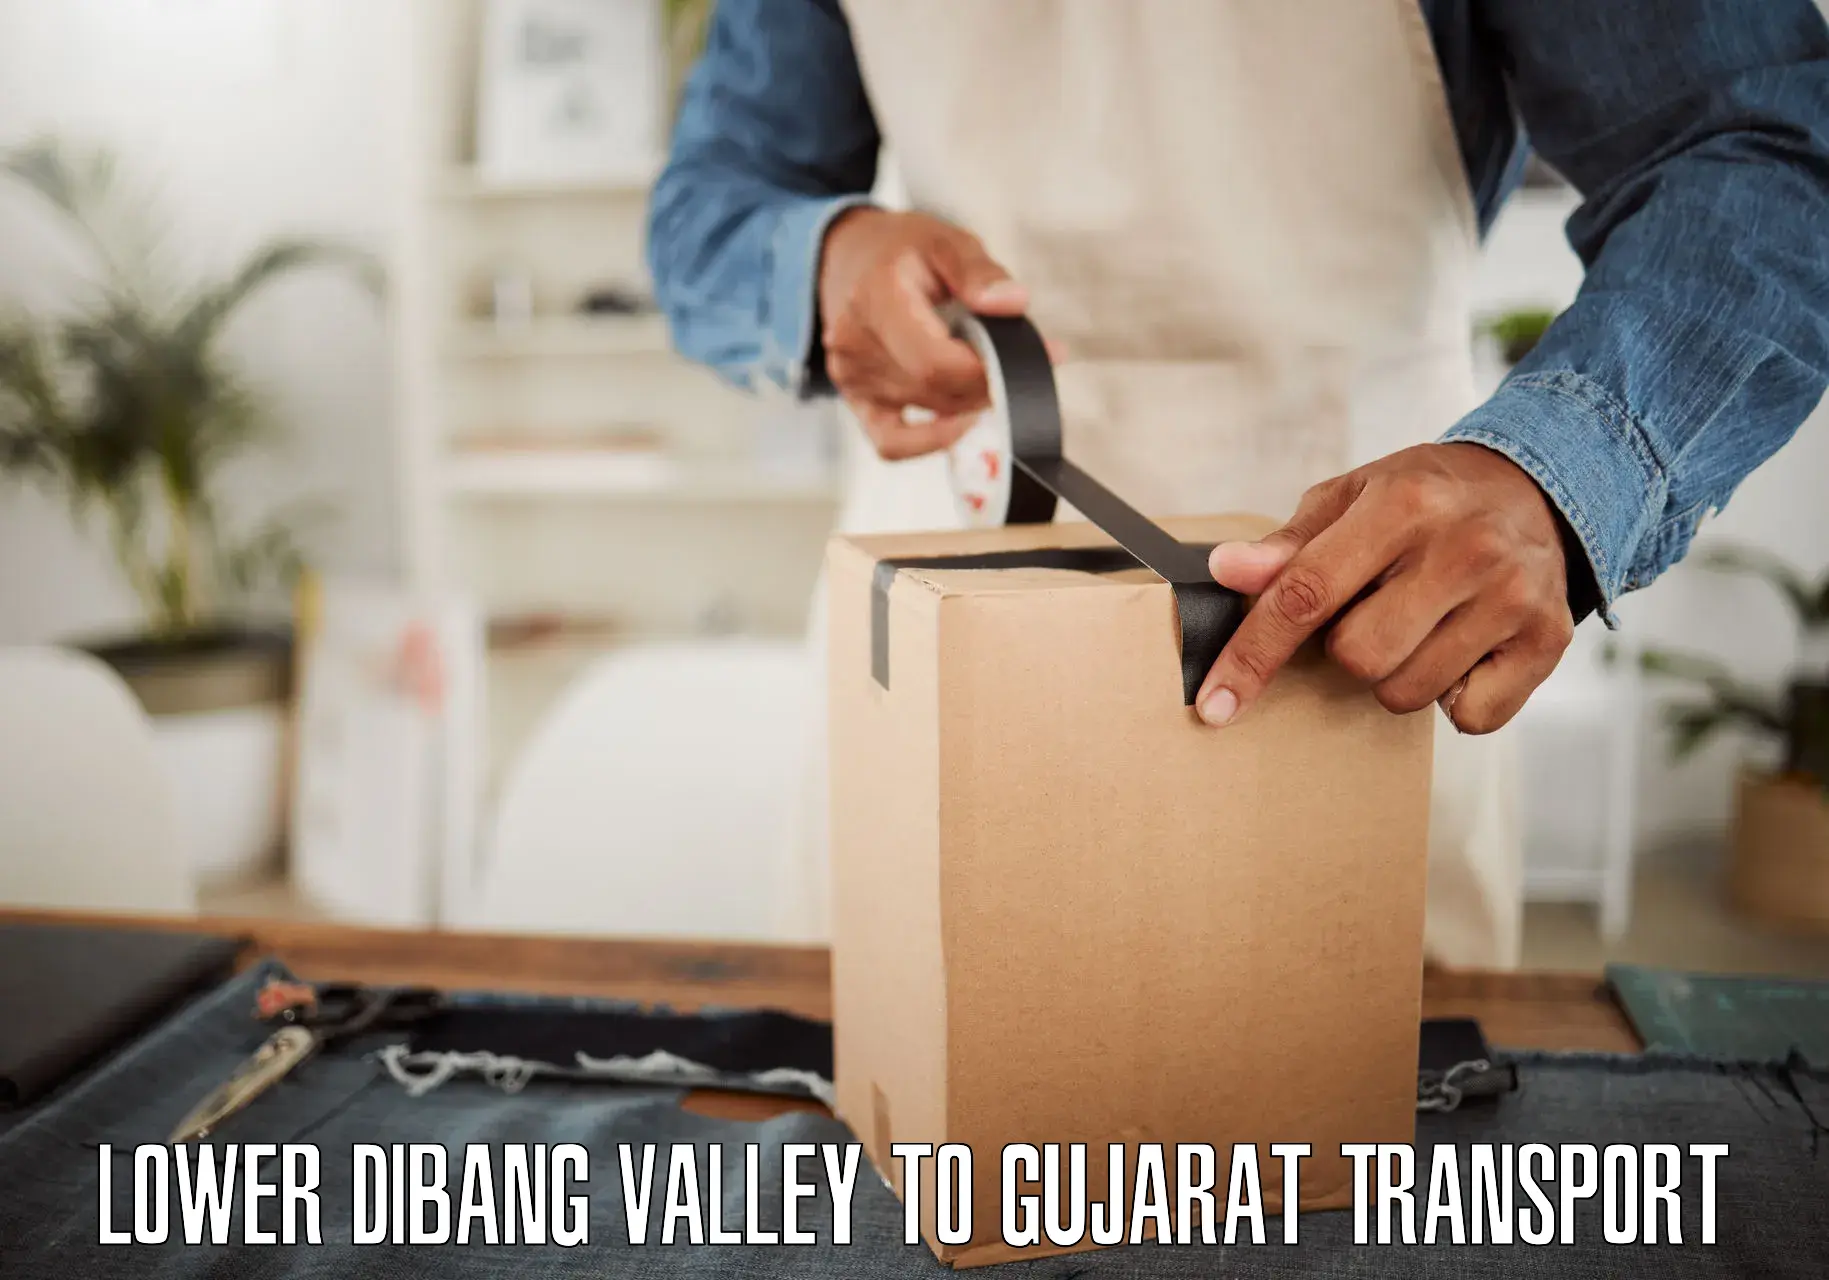 Transport in sharing Lower Dibang Valley to Dharmaram